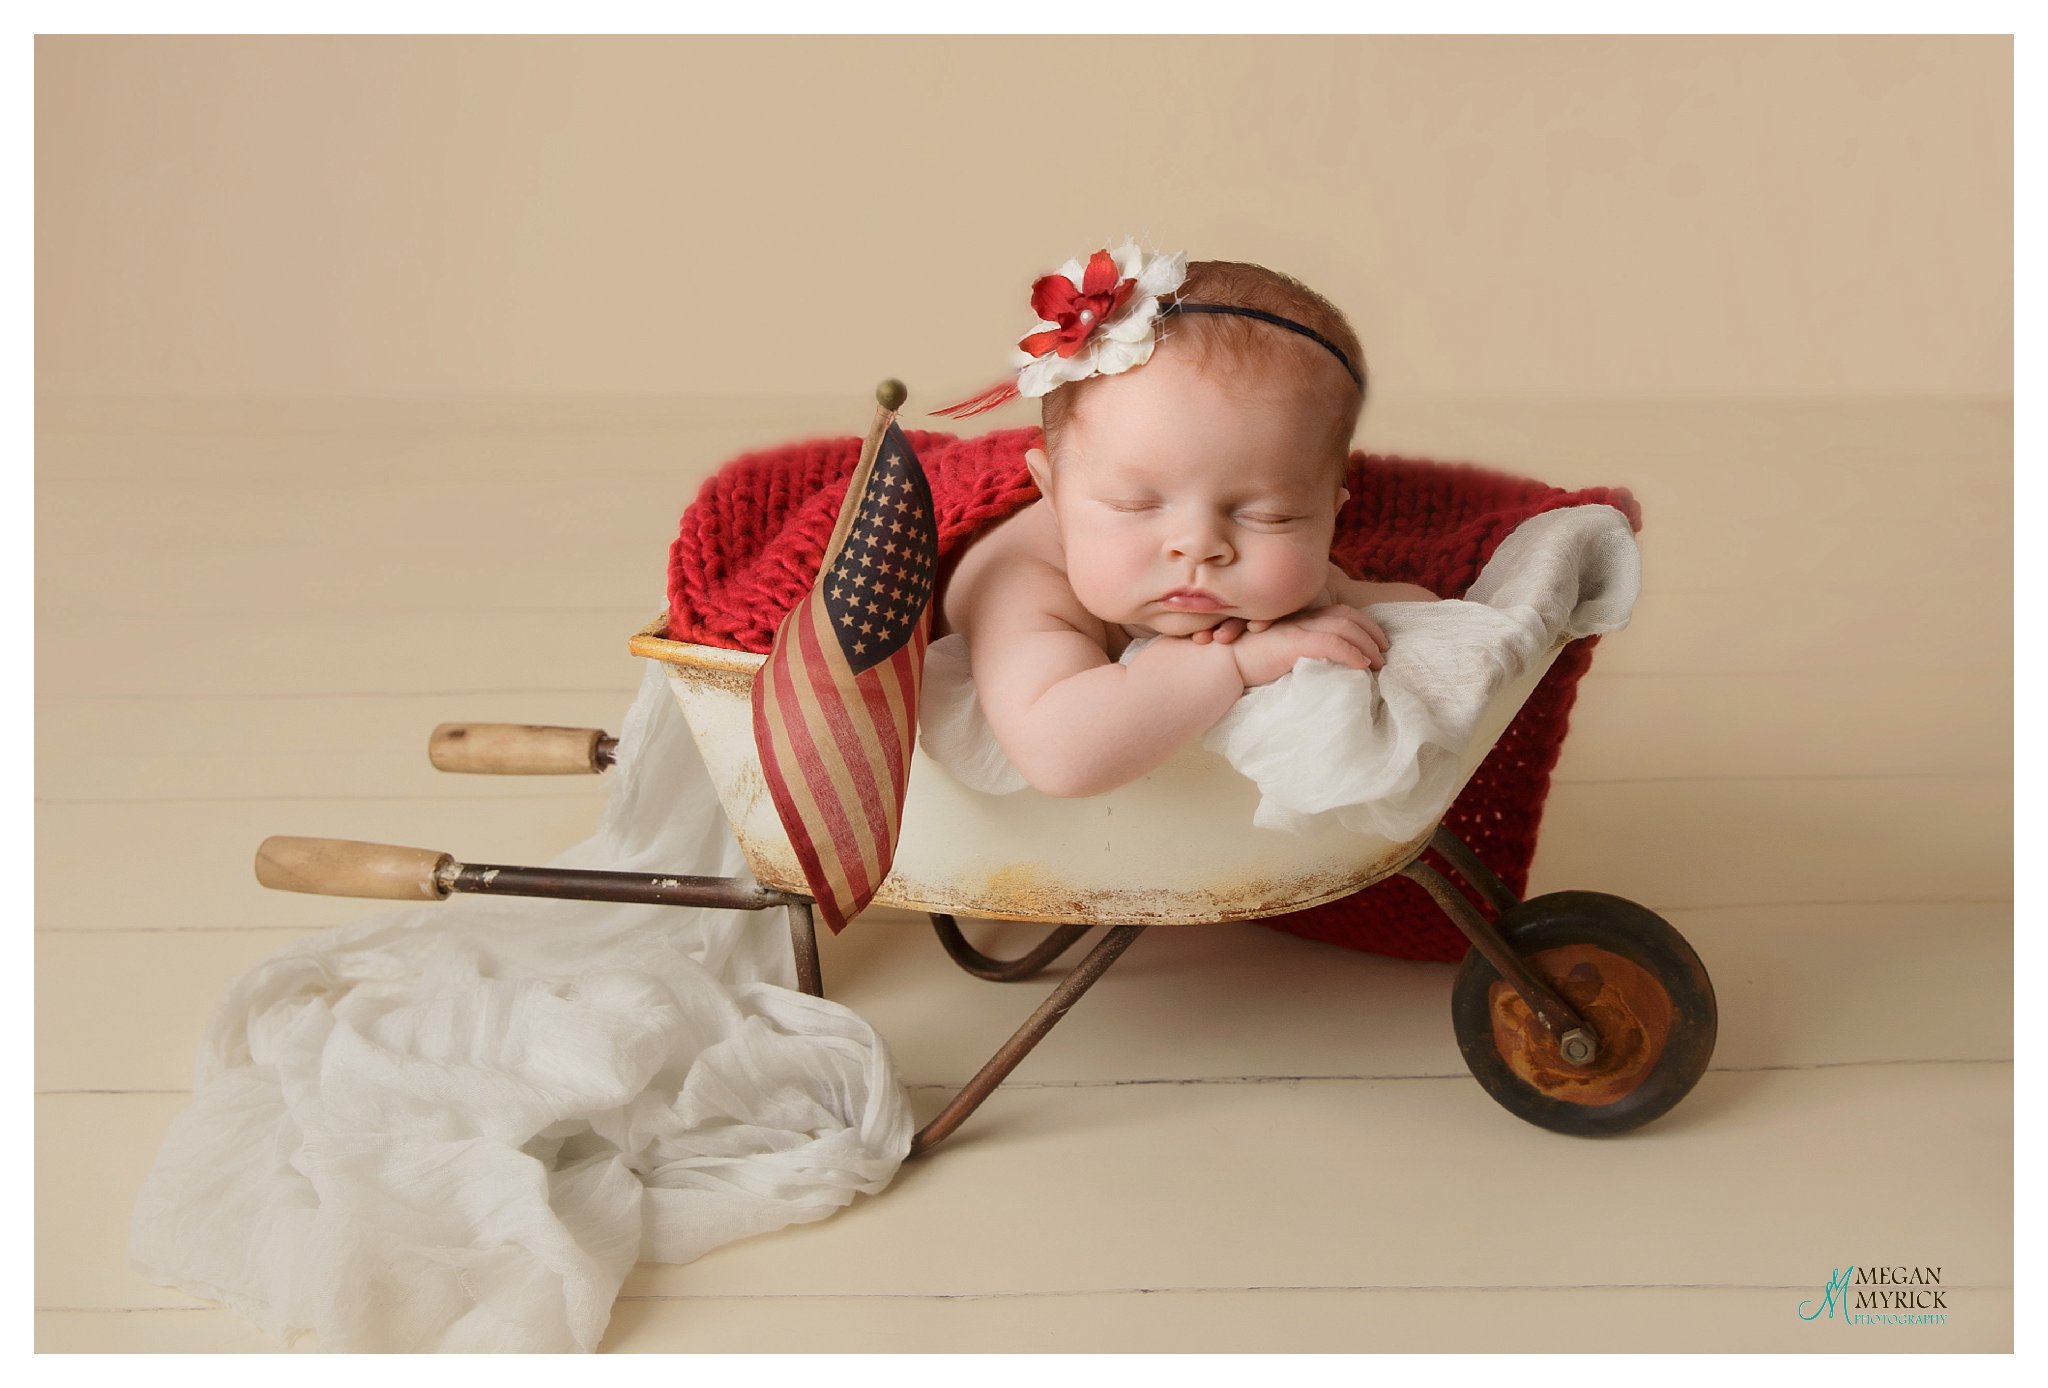 Hinesville Newborn Photographer | Megan Myrick Photography | www.meganmyrickphotography.com